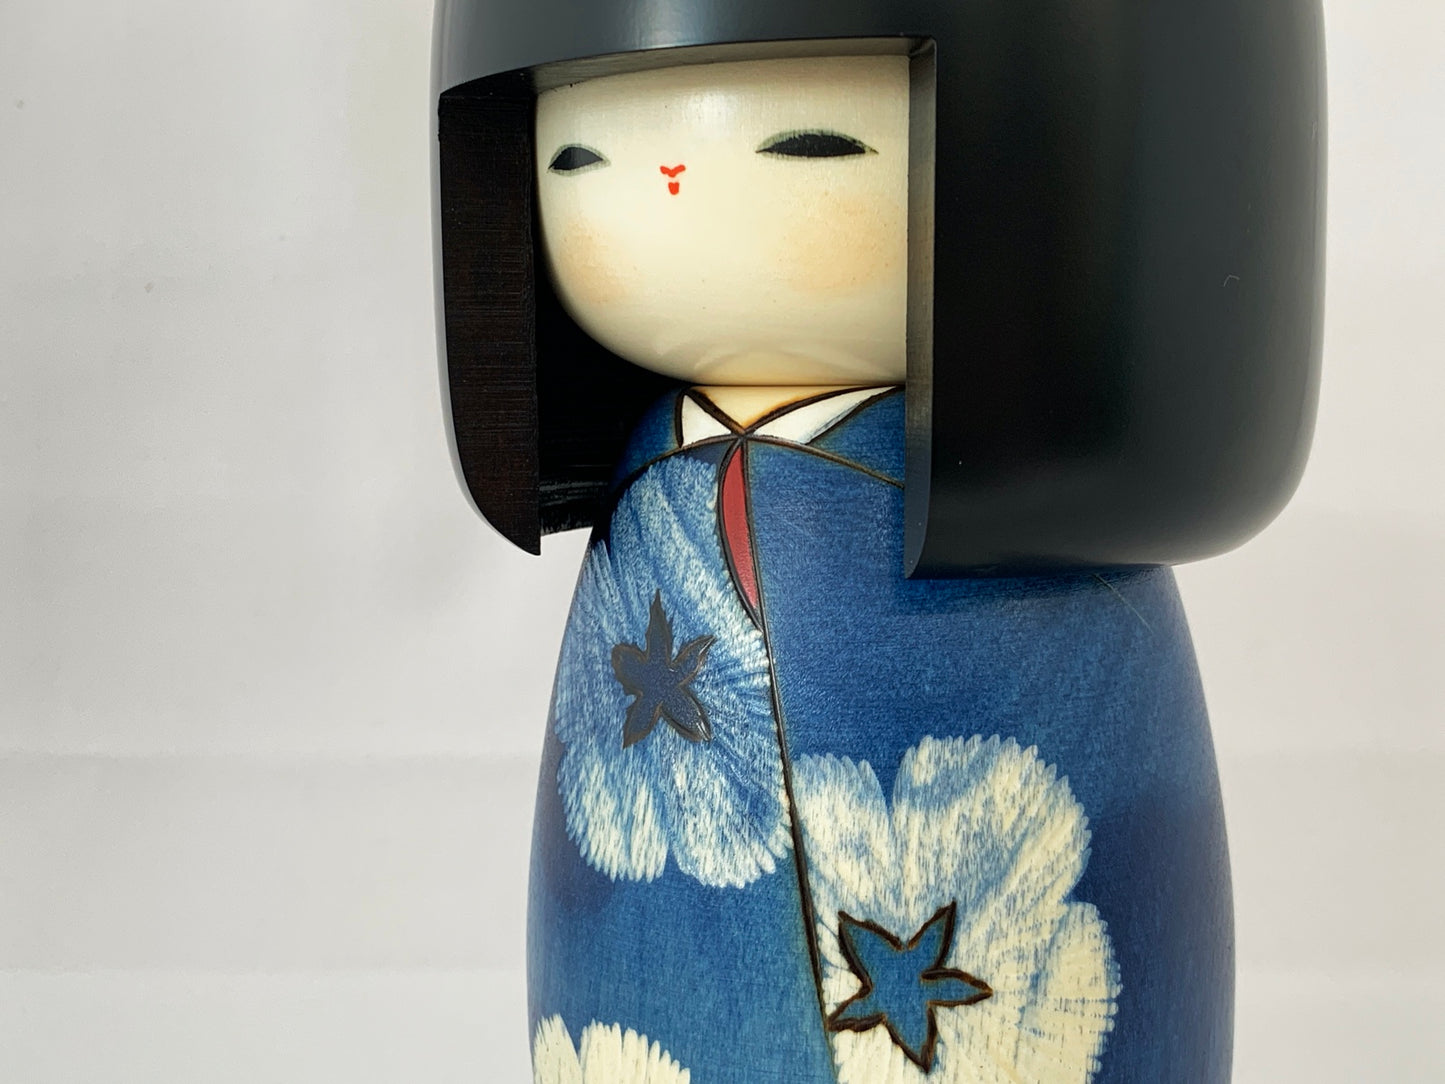 Kokeshi Wood Doll Large | Aiko